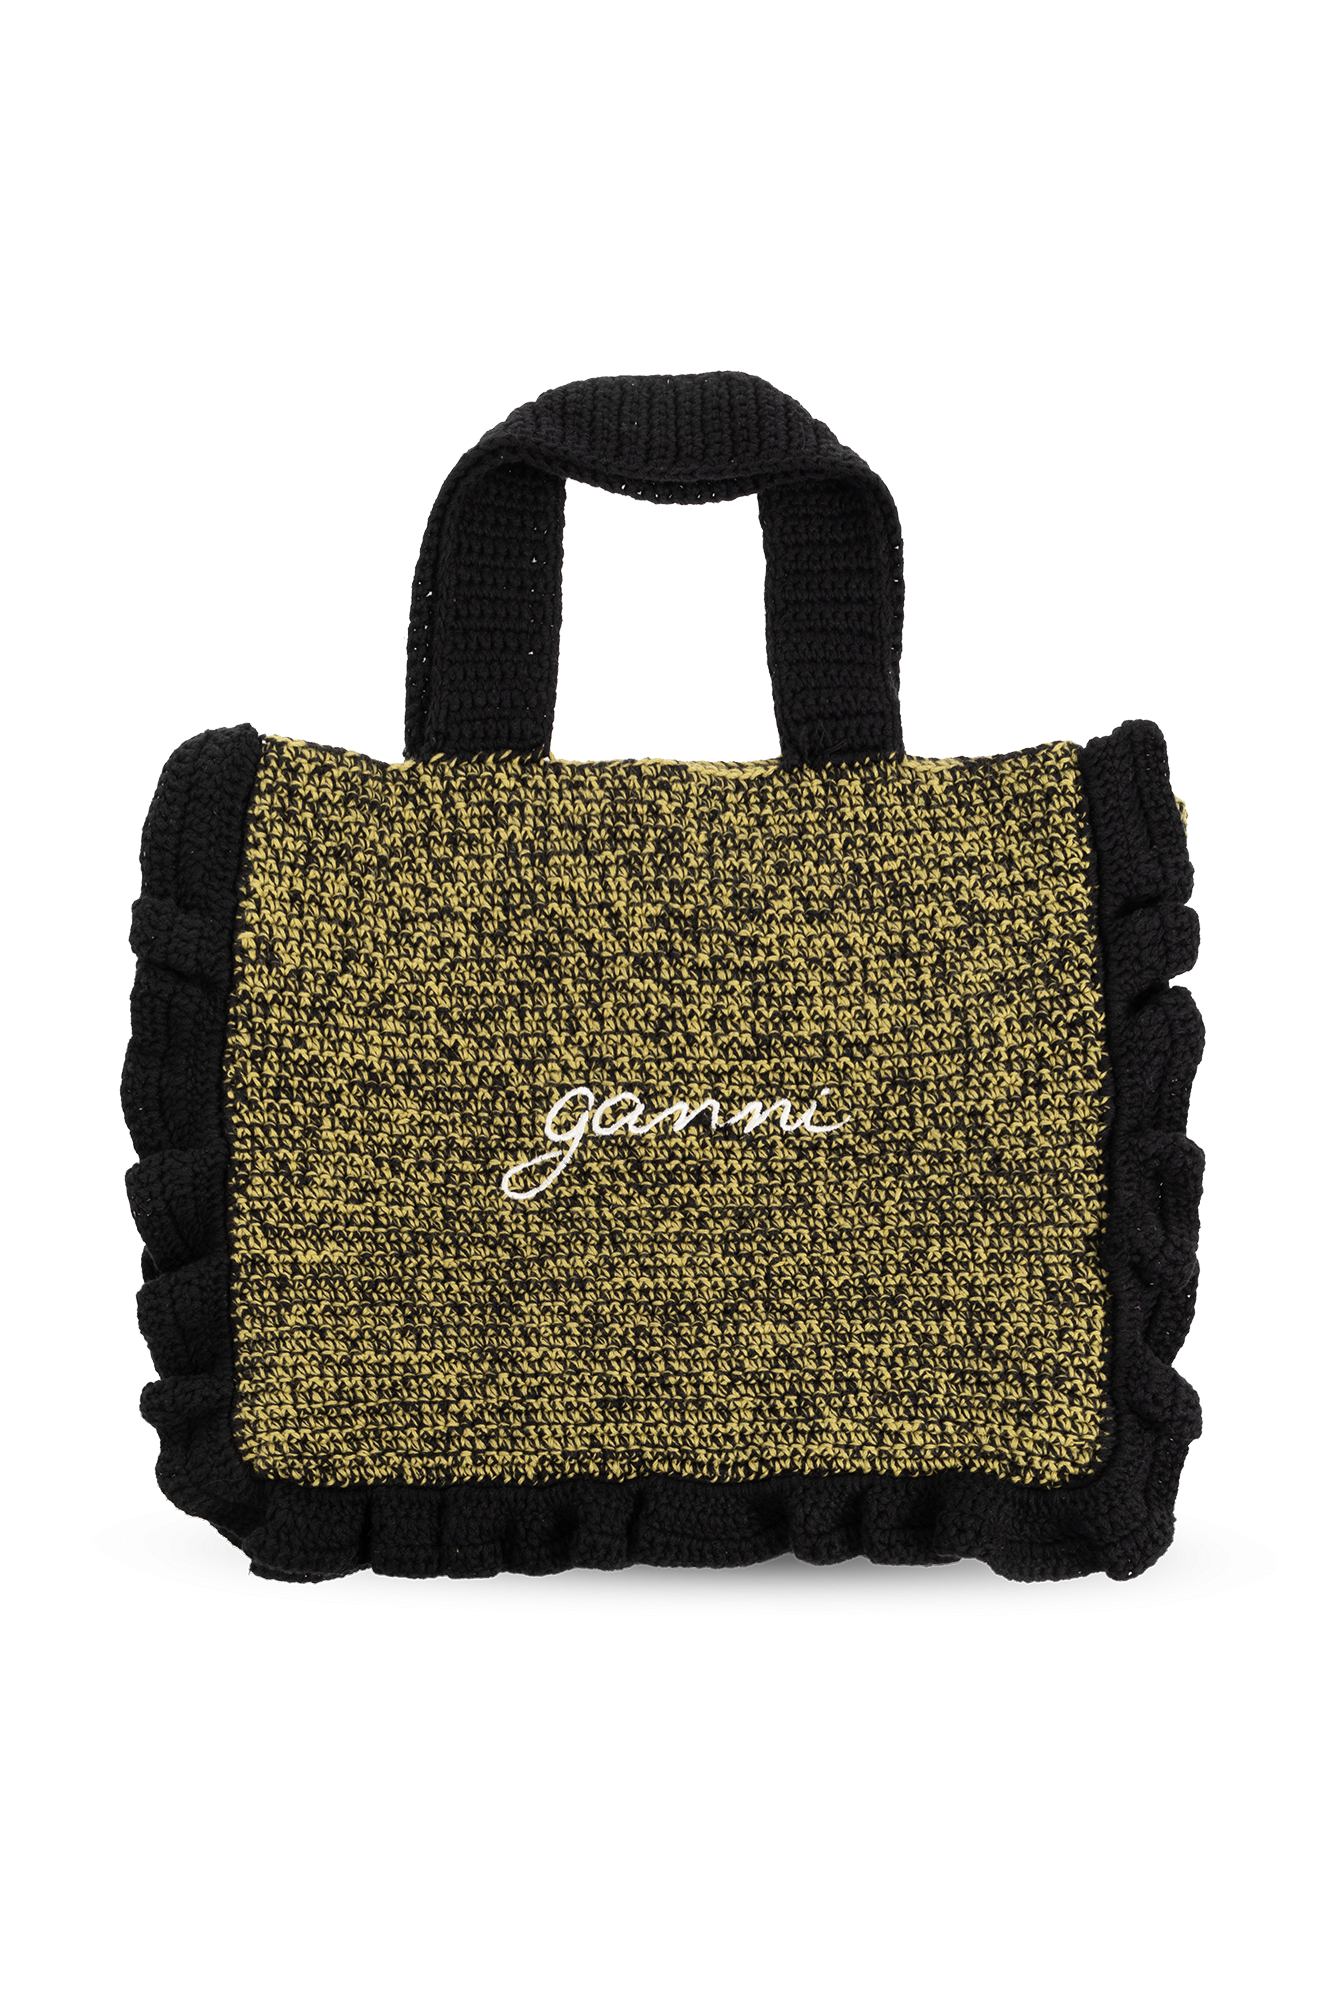 Ganni Shopper bag